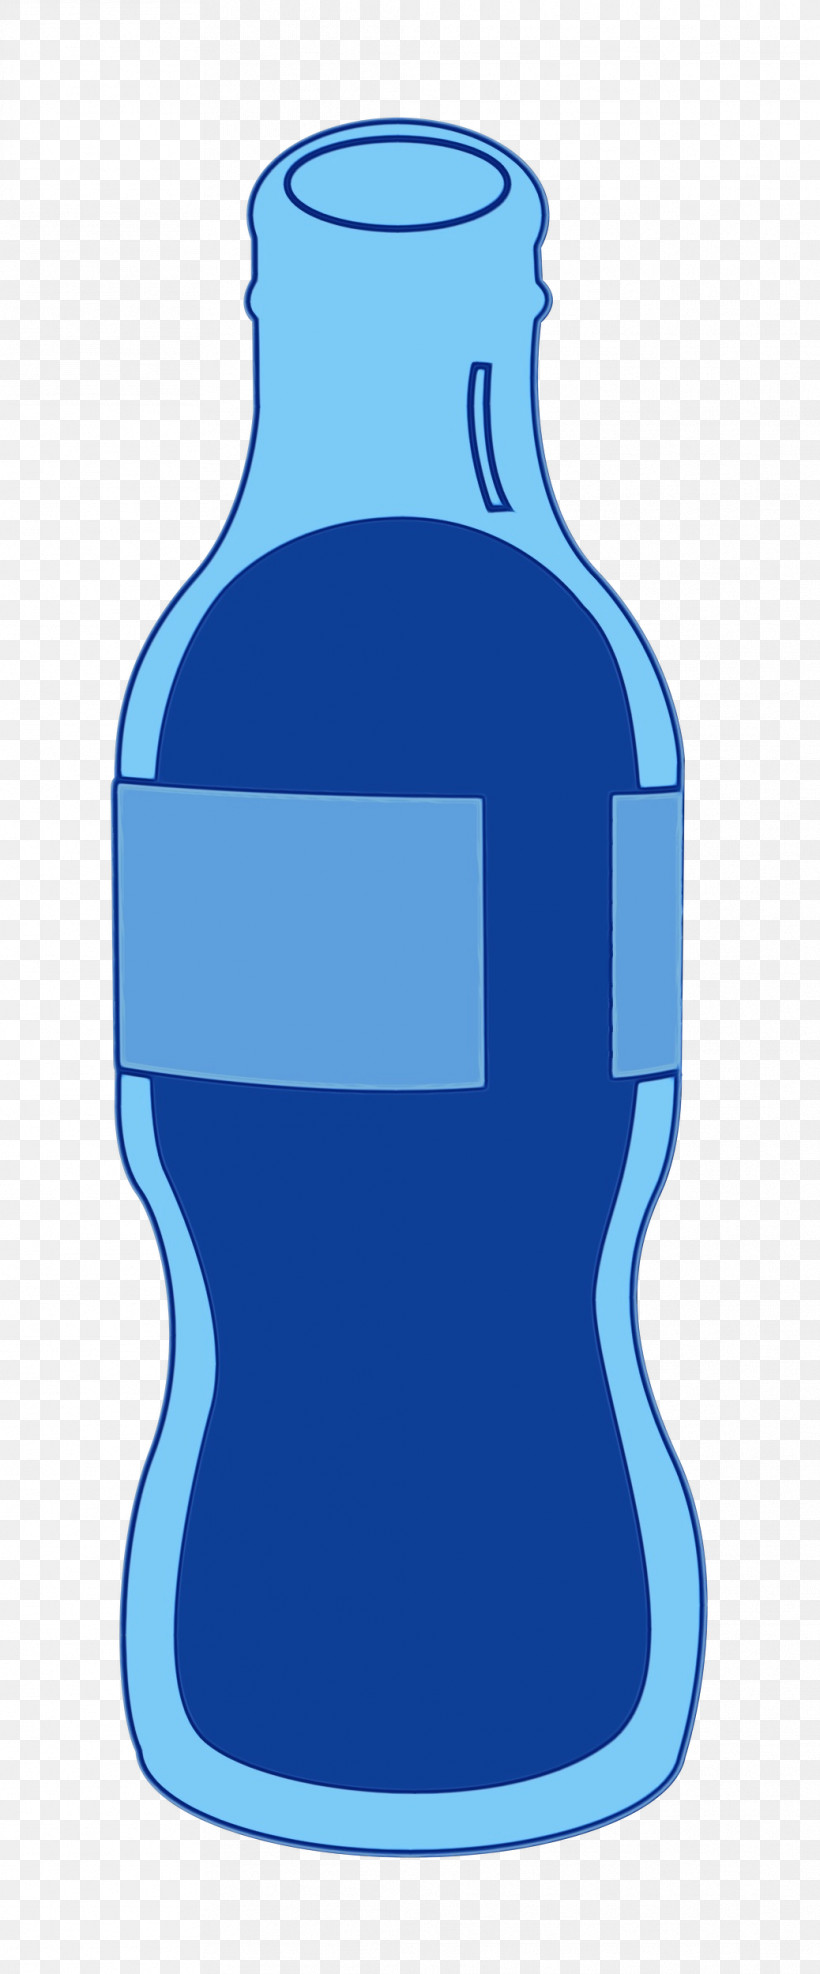 Glass Bottle Bottle Water Bottle Cobalt Blue Glass, PNG, 1038x2500px, Drink Element, Blue, Bottle, Cobalt Blue, Glass Download Free